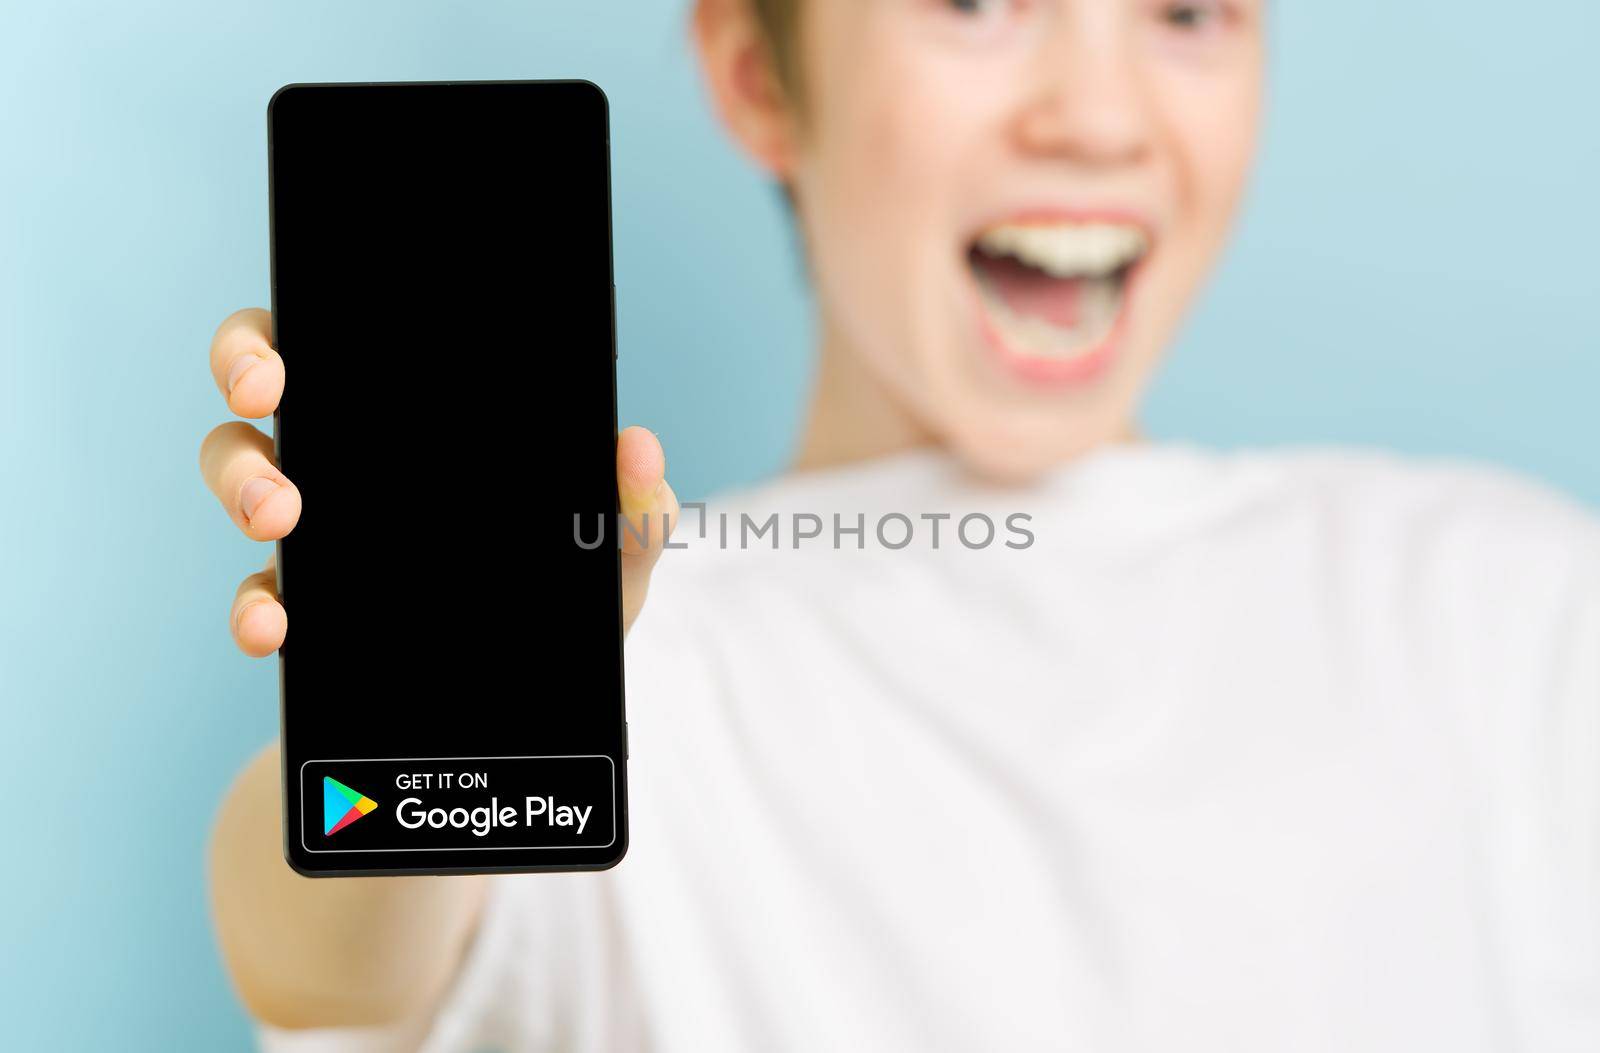 February 2022 - Tallinn, Estonia. Unfocused happy smiling boy with smartphone showing Google play market app logo by PhotoTime